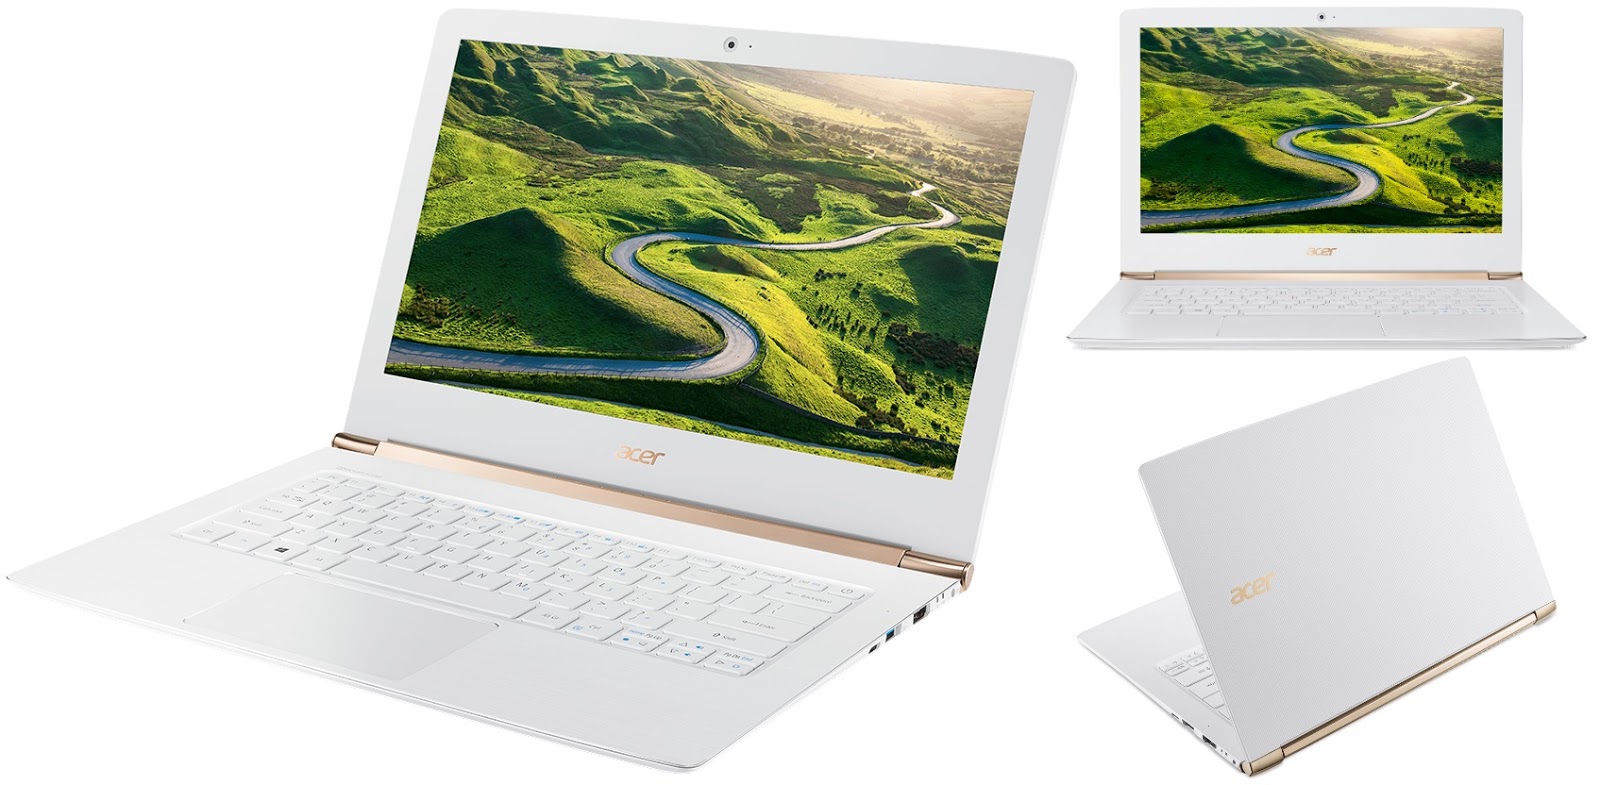 Ноутбук Acer Aspire v3-372. Ноутбук Acer Aspire v3-371-52pk. Ноутбук Acer Aspire v3-372-593c. Ноутбук Acer Aspire v3-372-590j.